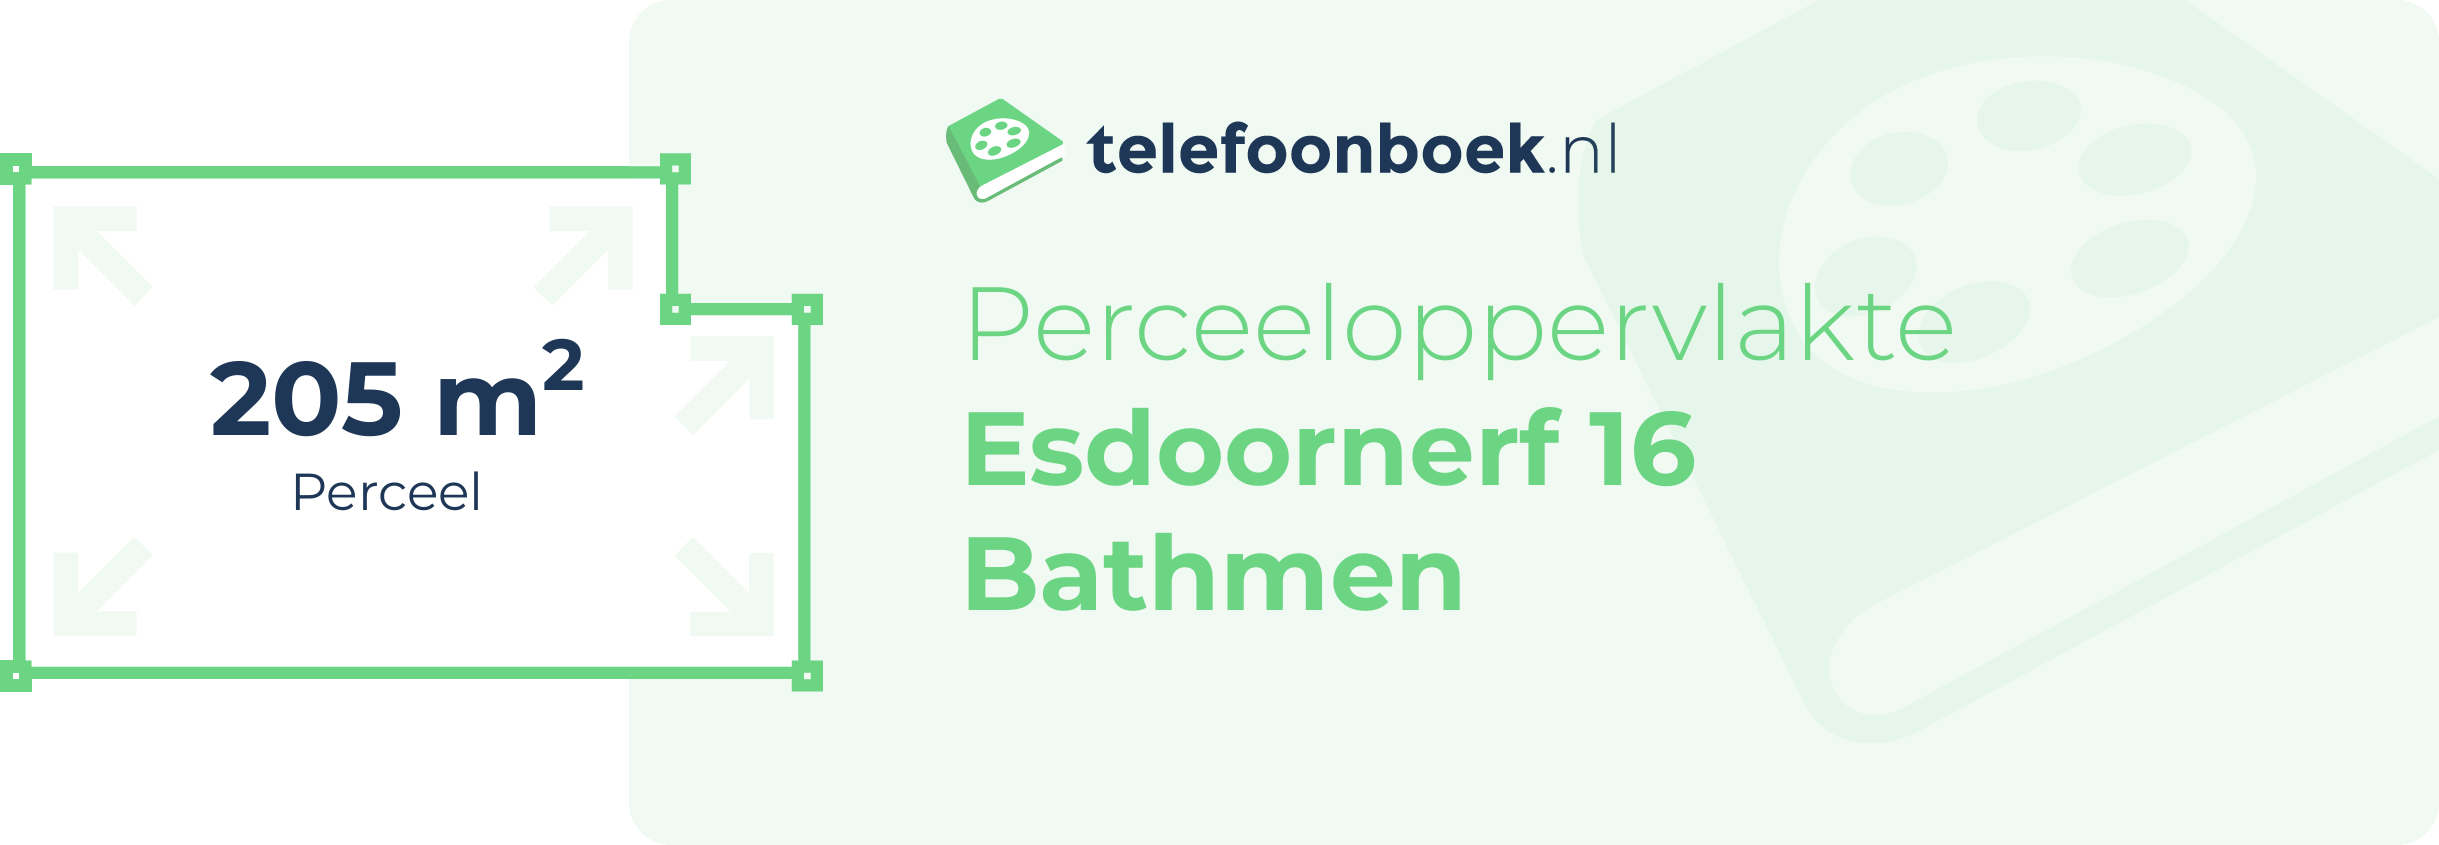 Perceeloppervlakte Esdoornerf 16 Bathmen